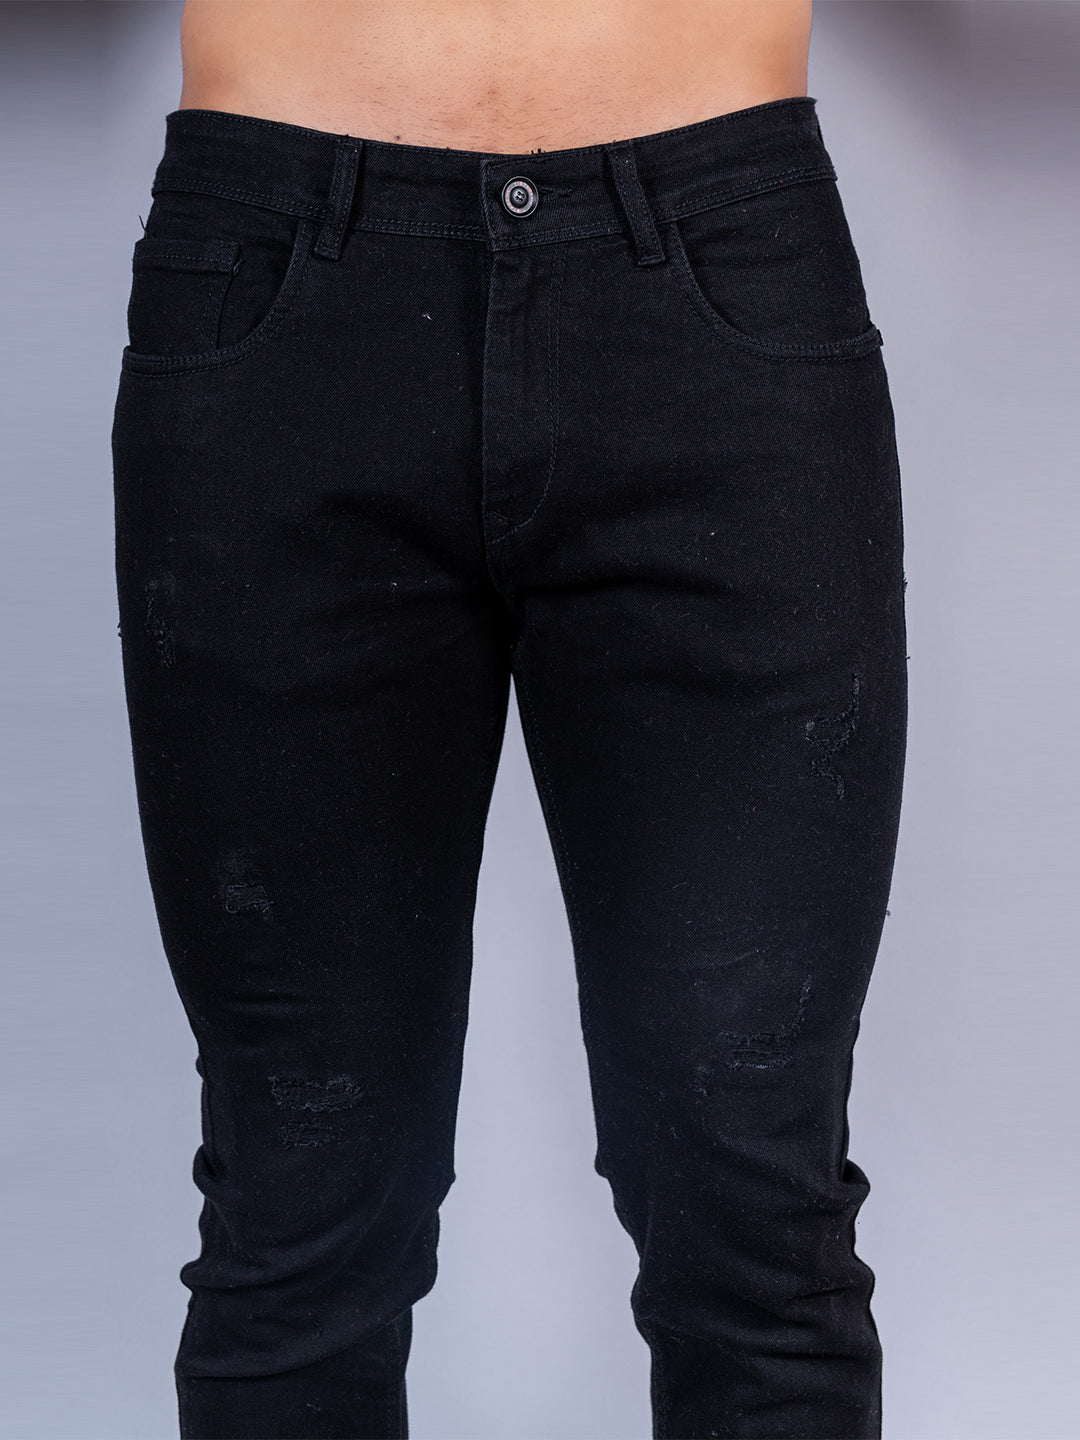 Men's Distressed Black Jeans Skinny Fit Ripped Denim Pants | FREE FAST  SHIPPING | eBay